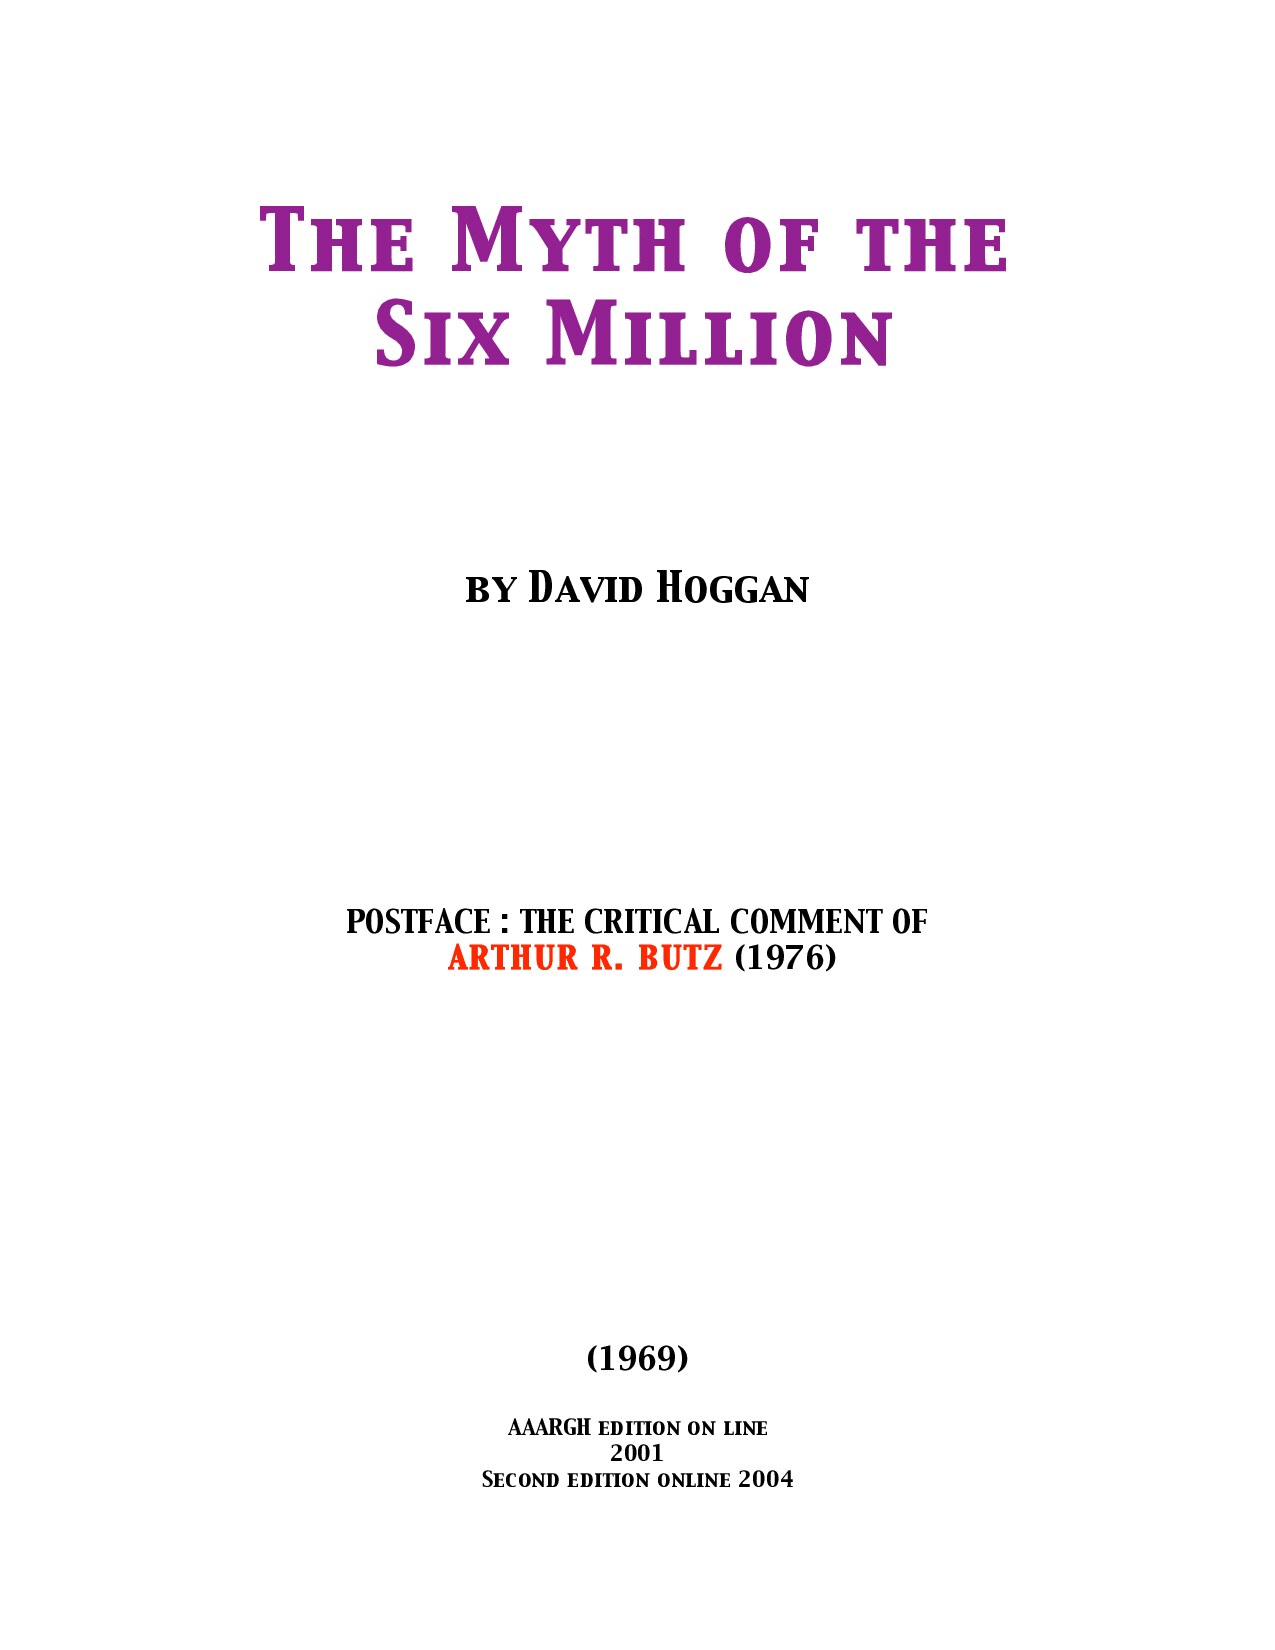 Hoggan, David; The Myth Of The Six Million